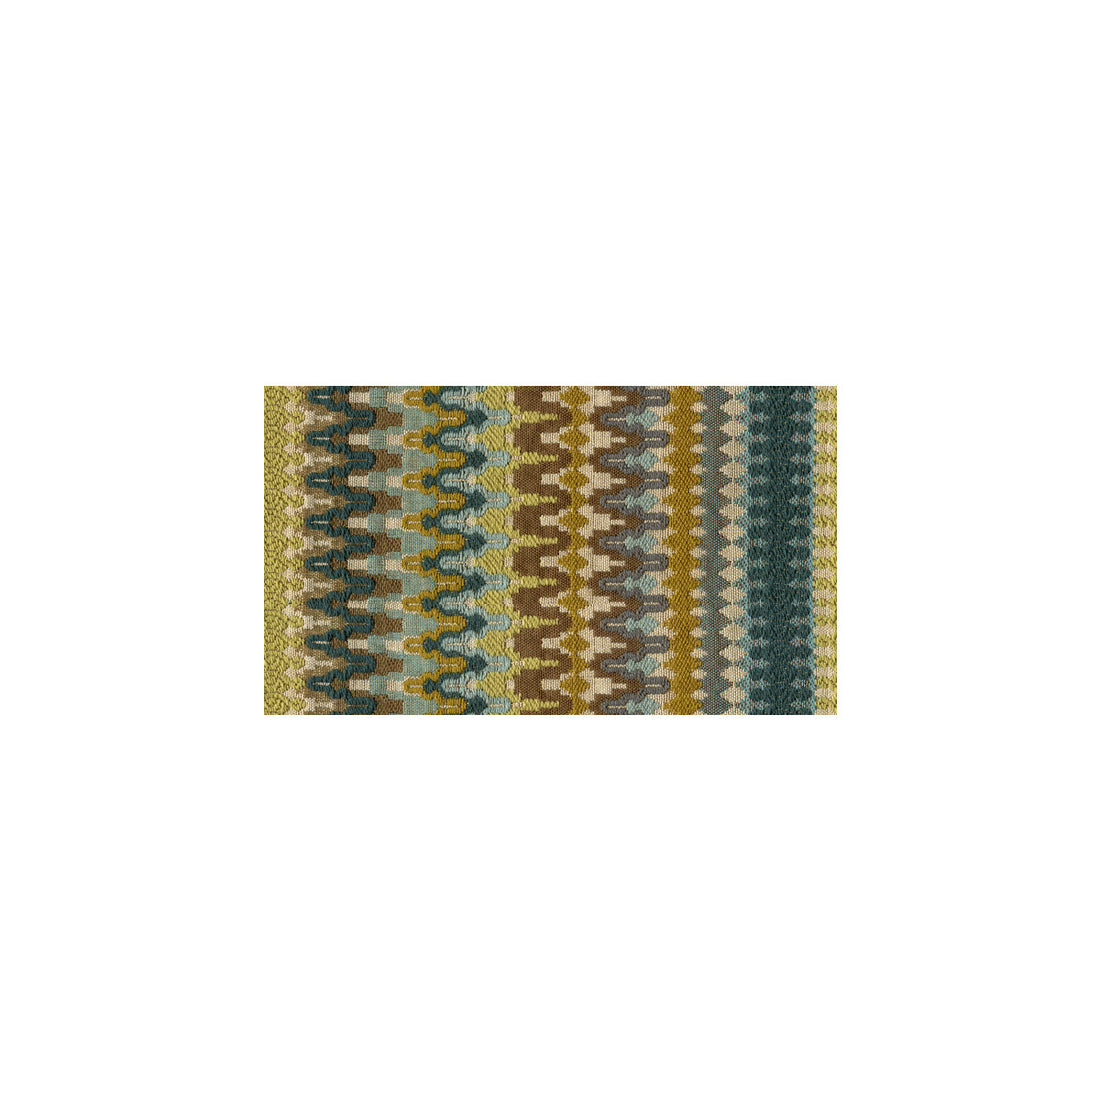 Kravet Design fabric in 32530-315 color - pattern 32530.315.0 - by Kravet Design in the Gis collection